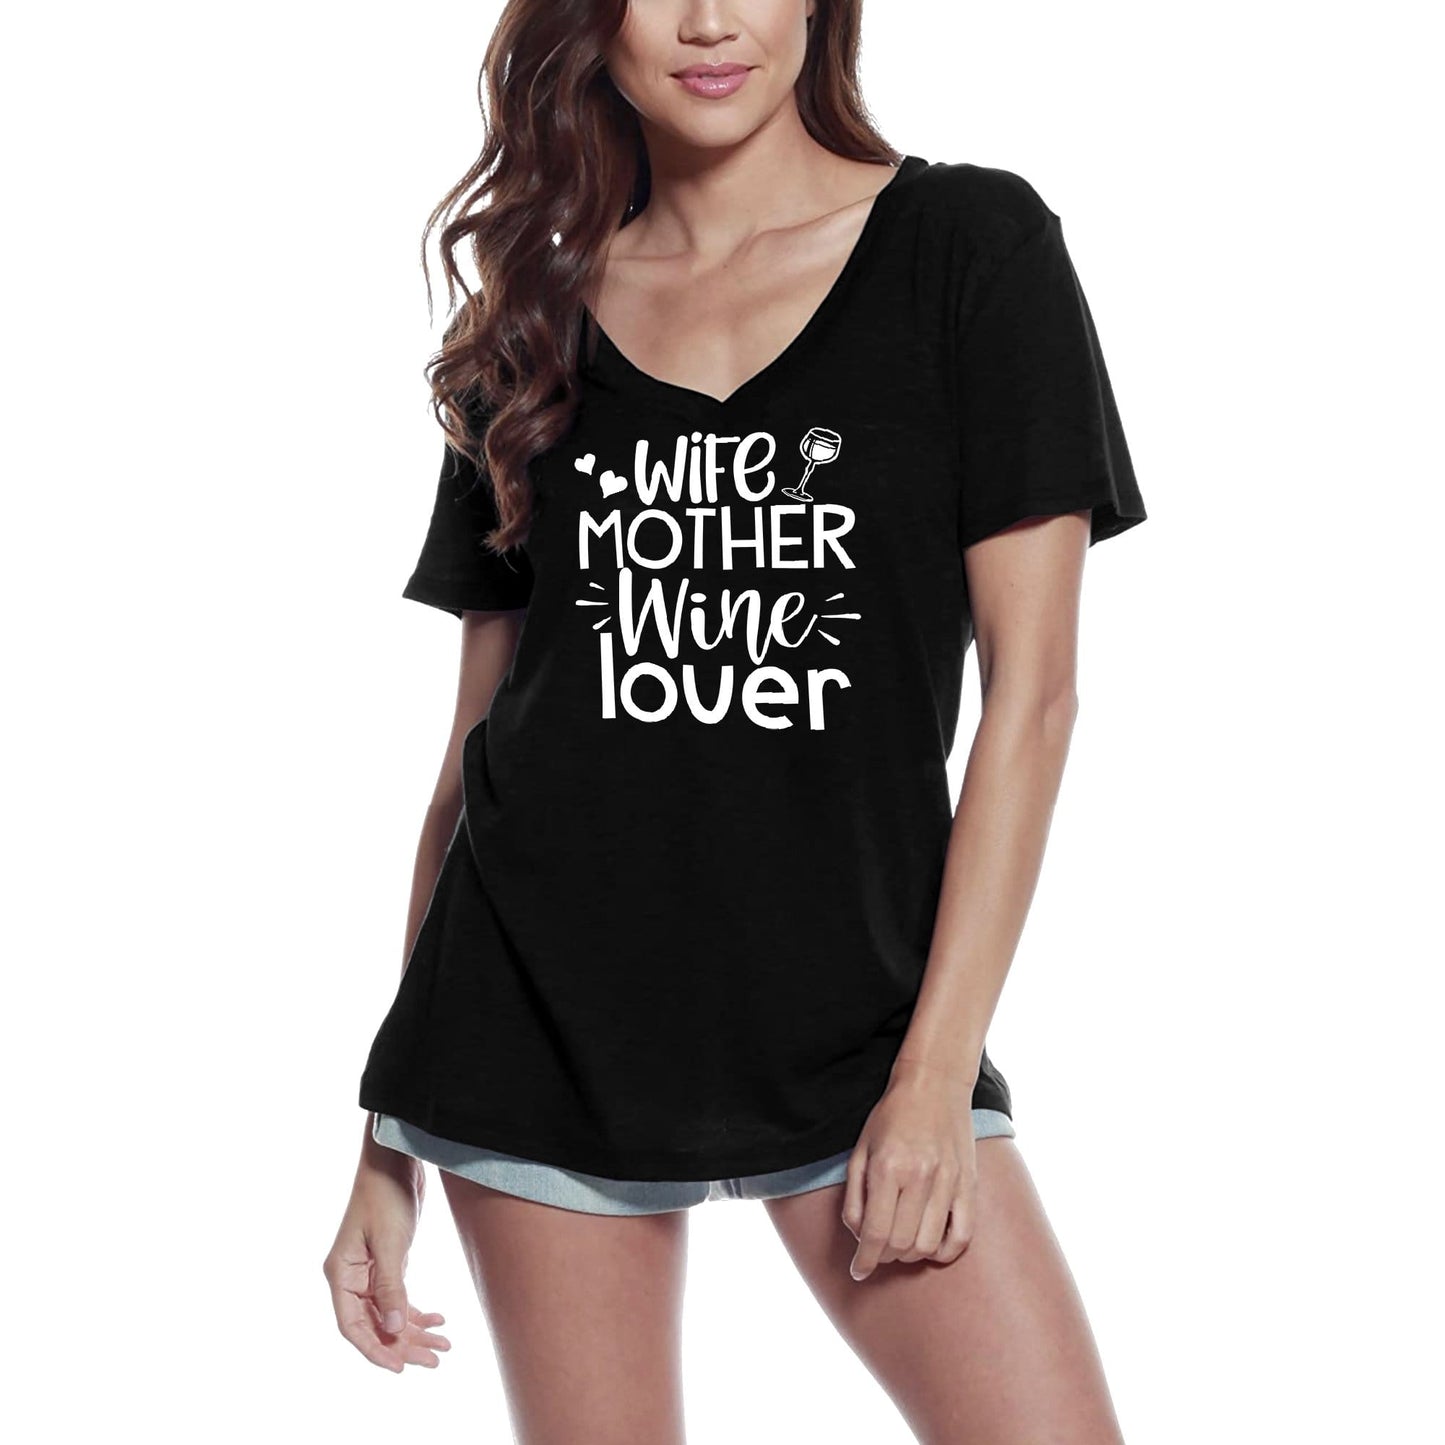 ULTRABASIC Women's T-Shirt Wife Mother Wine Lover - Funny Short Sleeve Tee Shirt